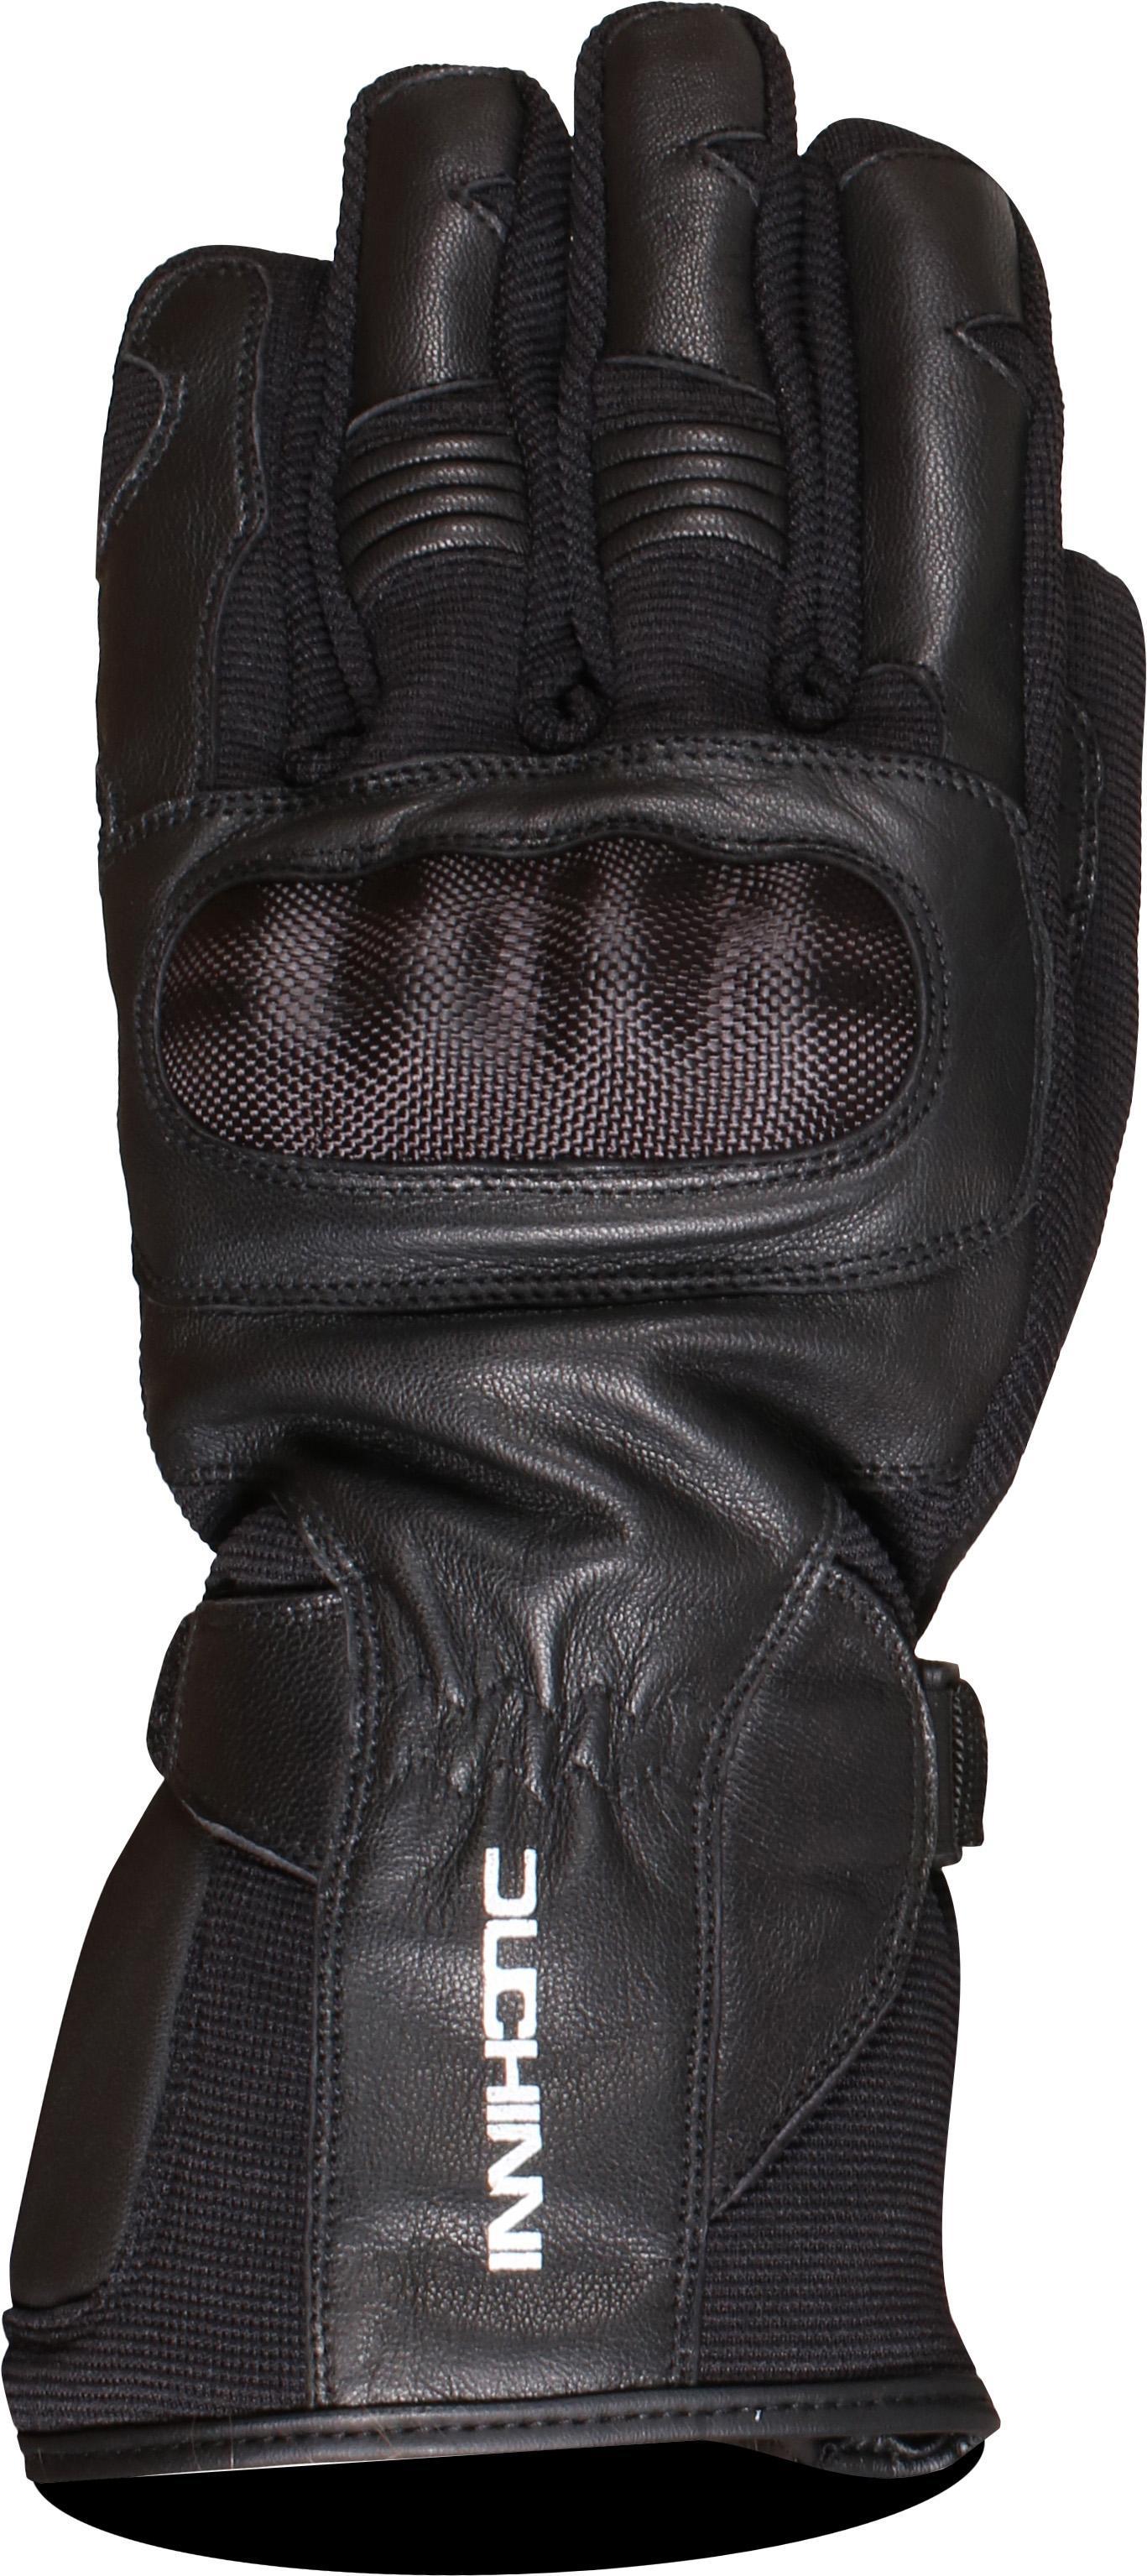 Duchinni Shadow Motorcycle Gloves - Black, L